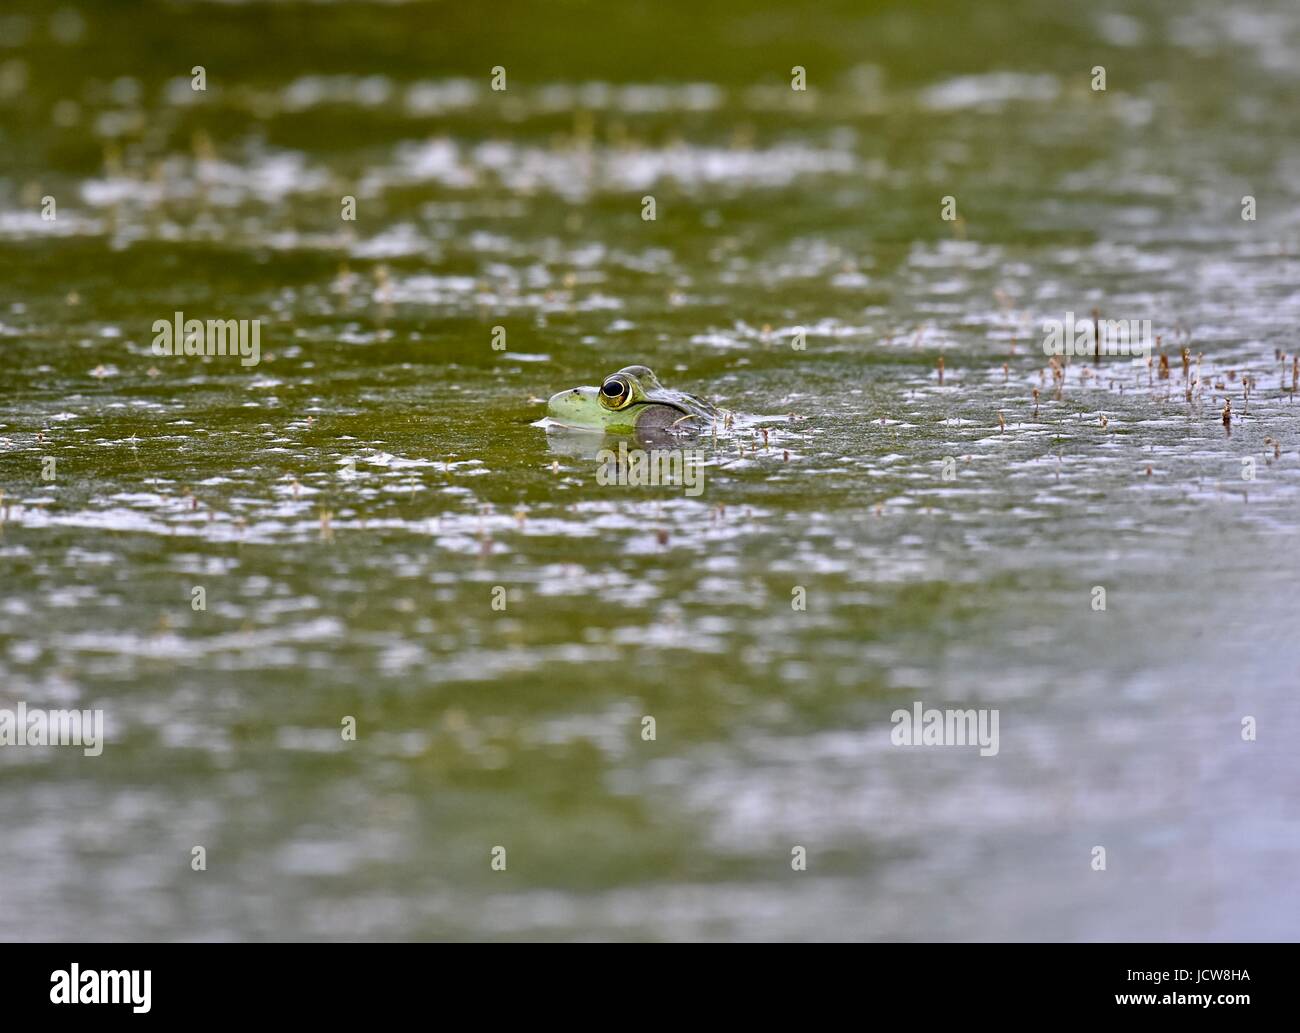 American bullfrog (Lithobates catesbeianus) in a pond Stock Photo